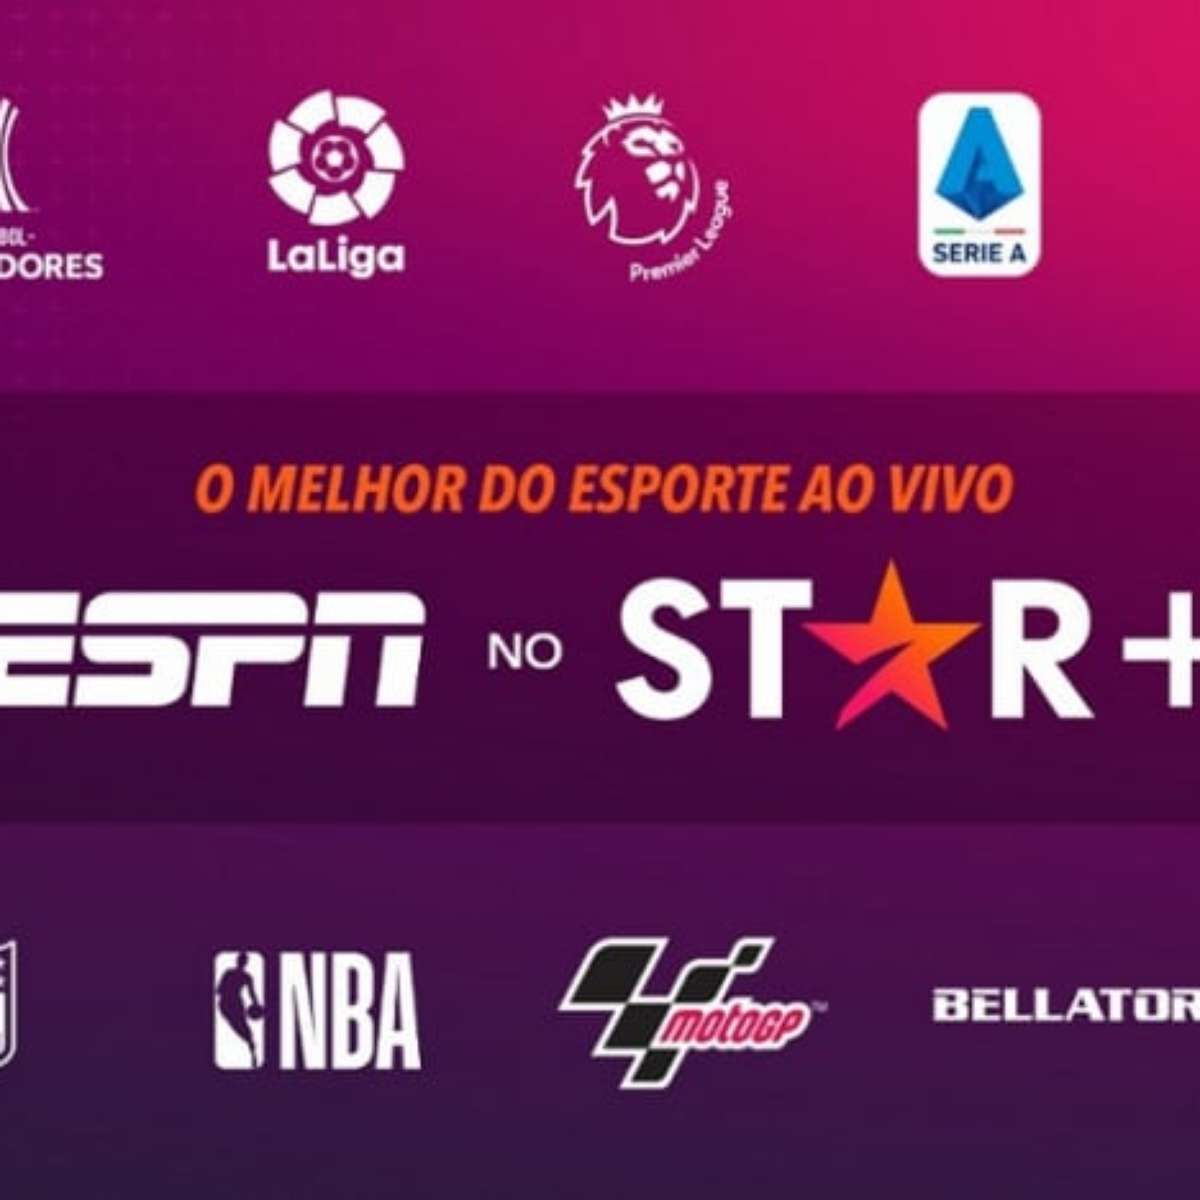 Star+ dá erro ao transmitir a Premier League e web se revolta